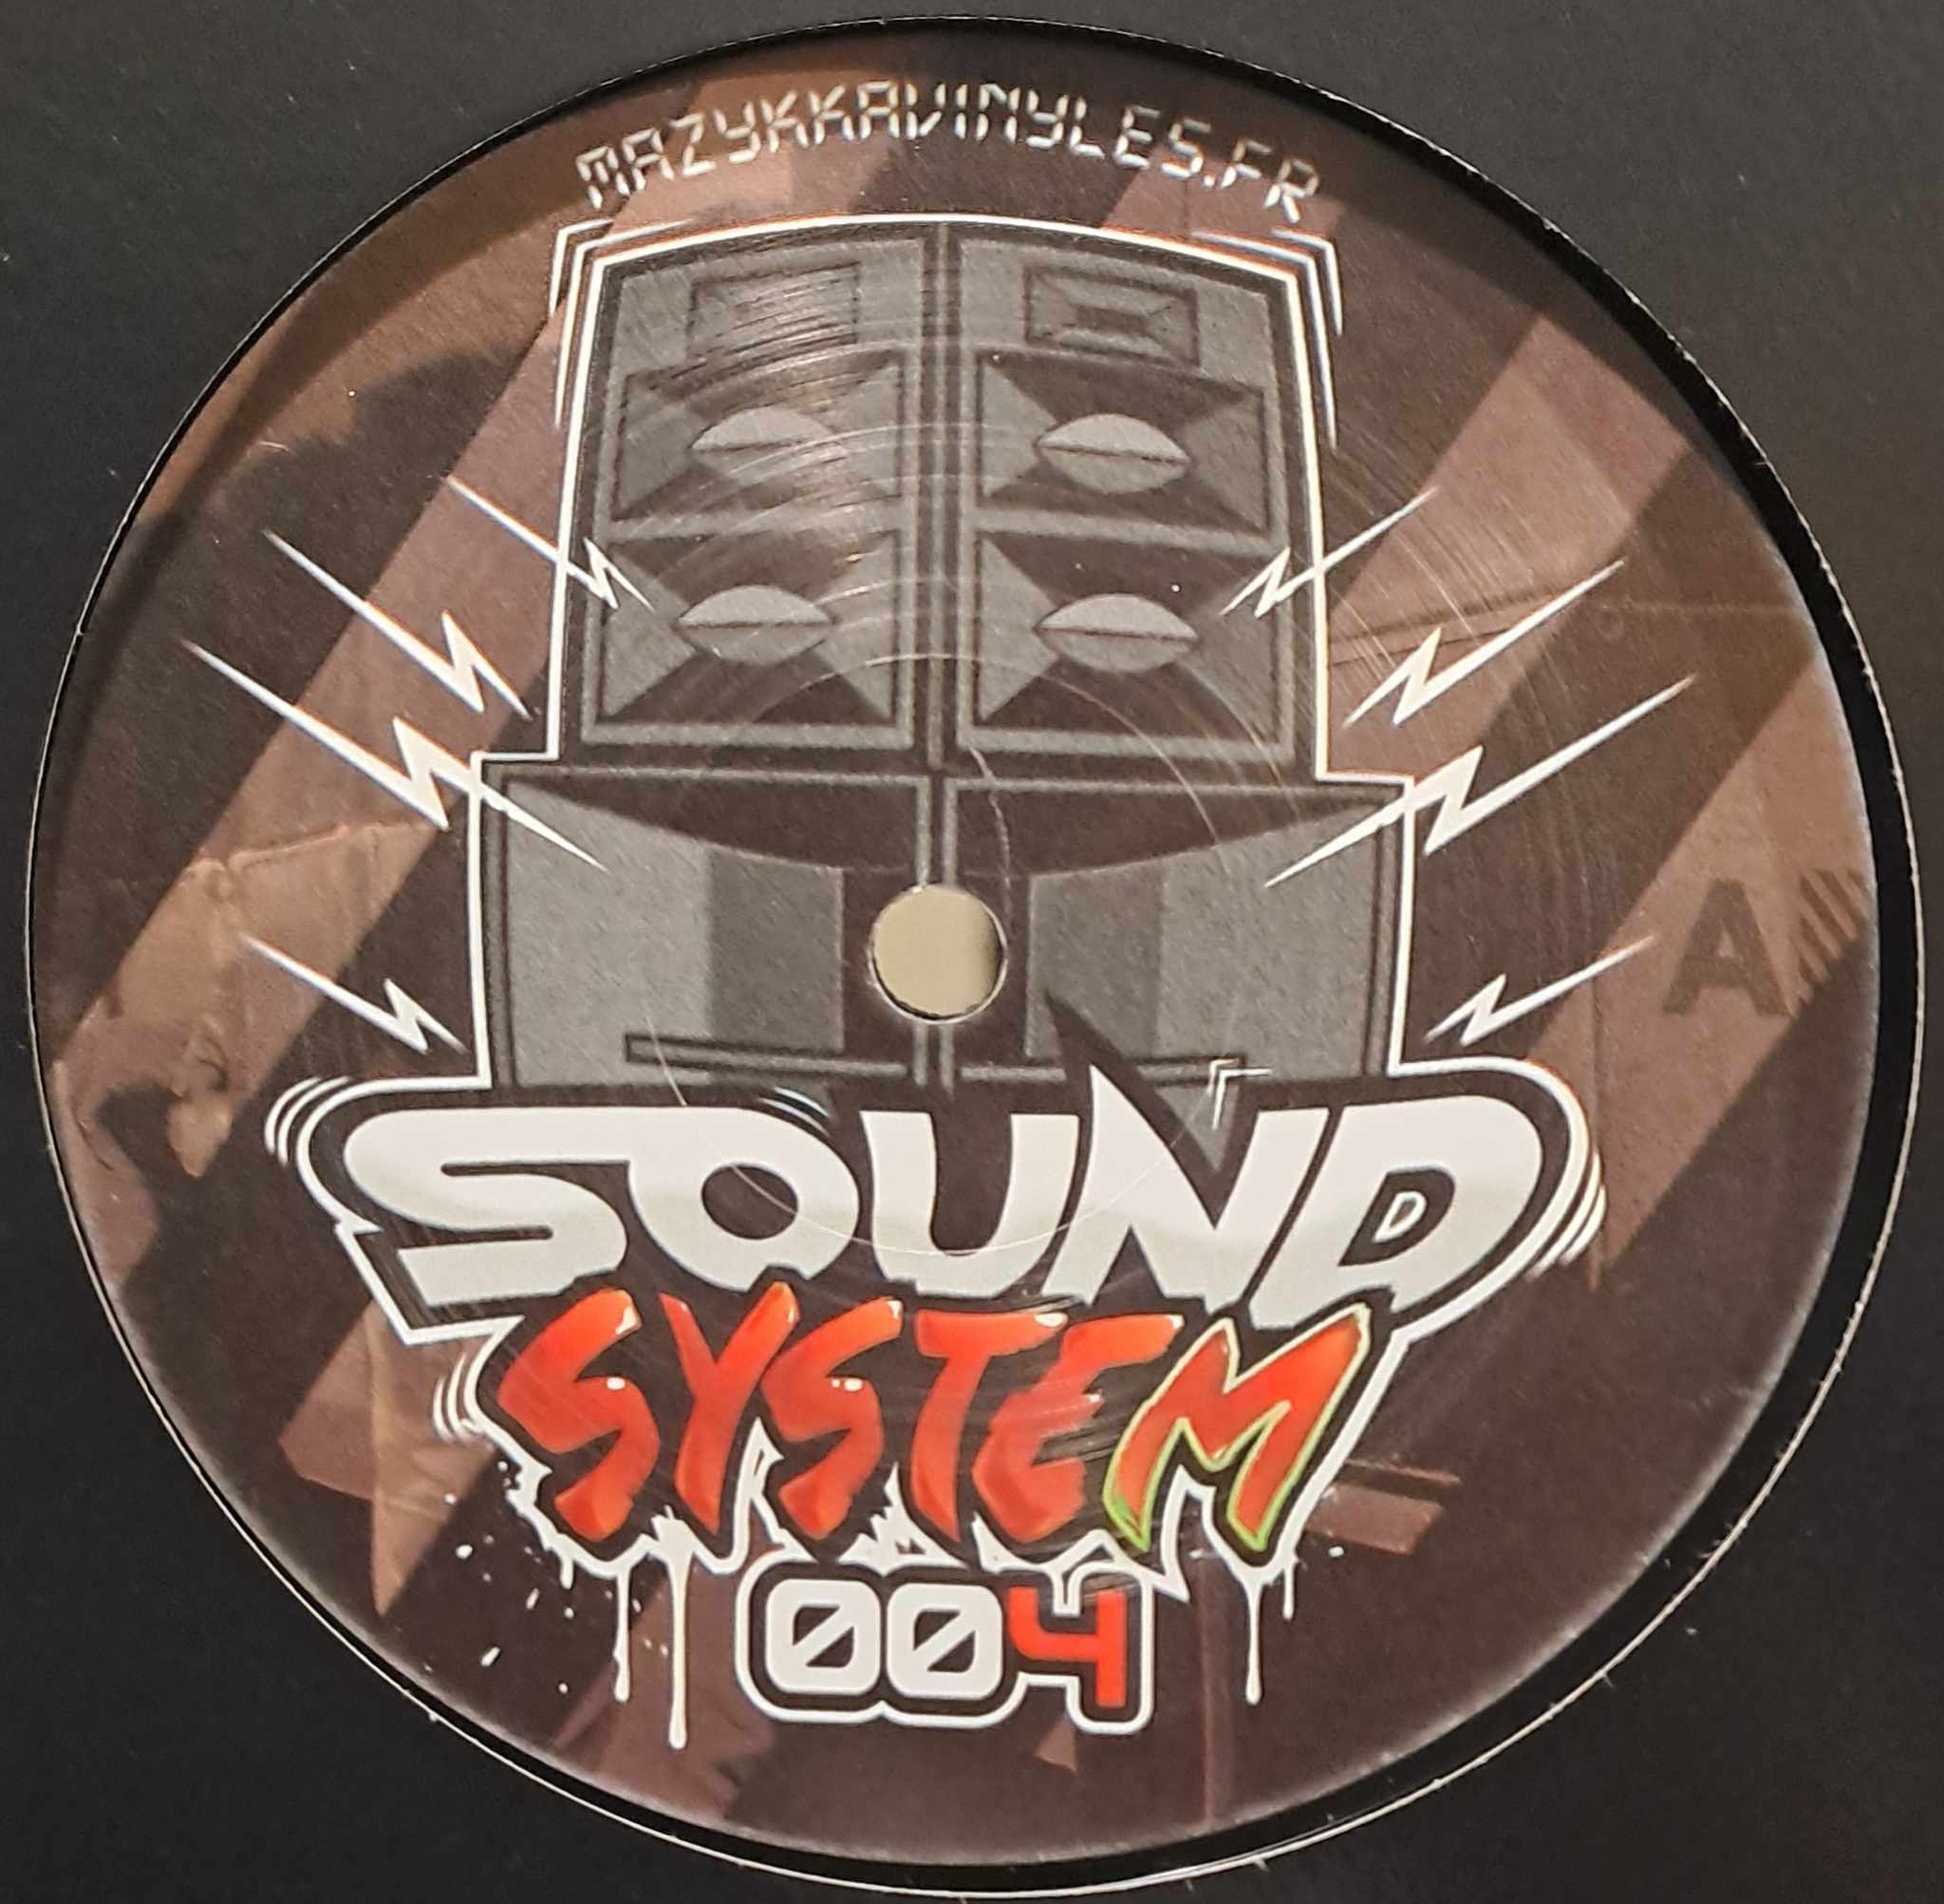 Sound System 004 - vinyle hardcore